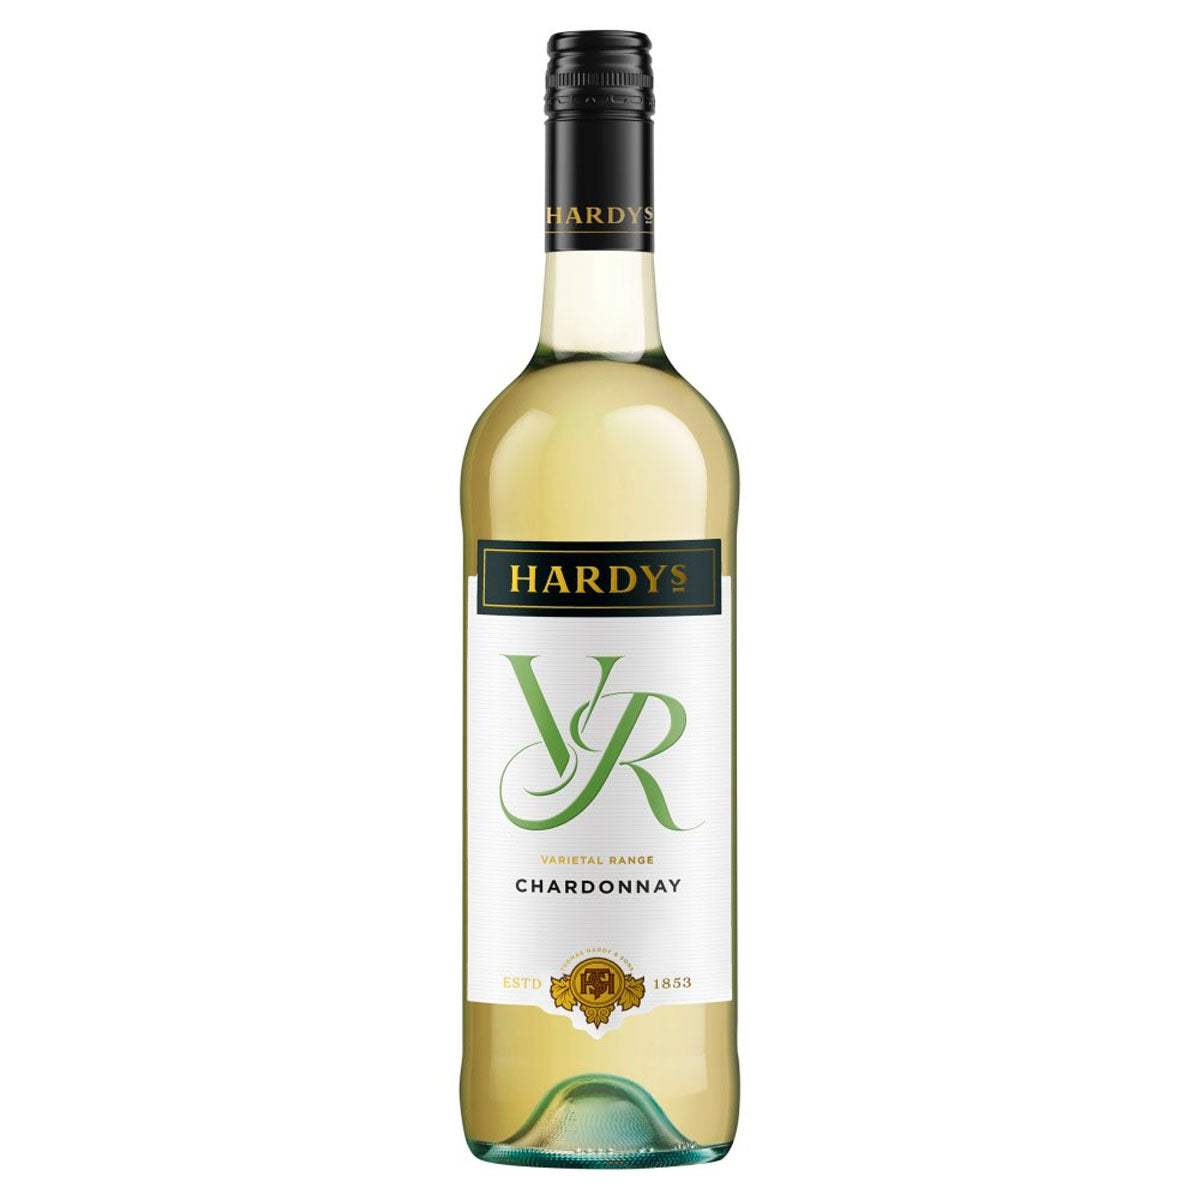 Hardys - VR Chardonnay (11% ABV) - 750ml.